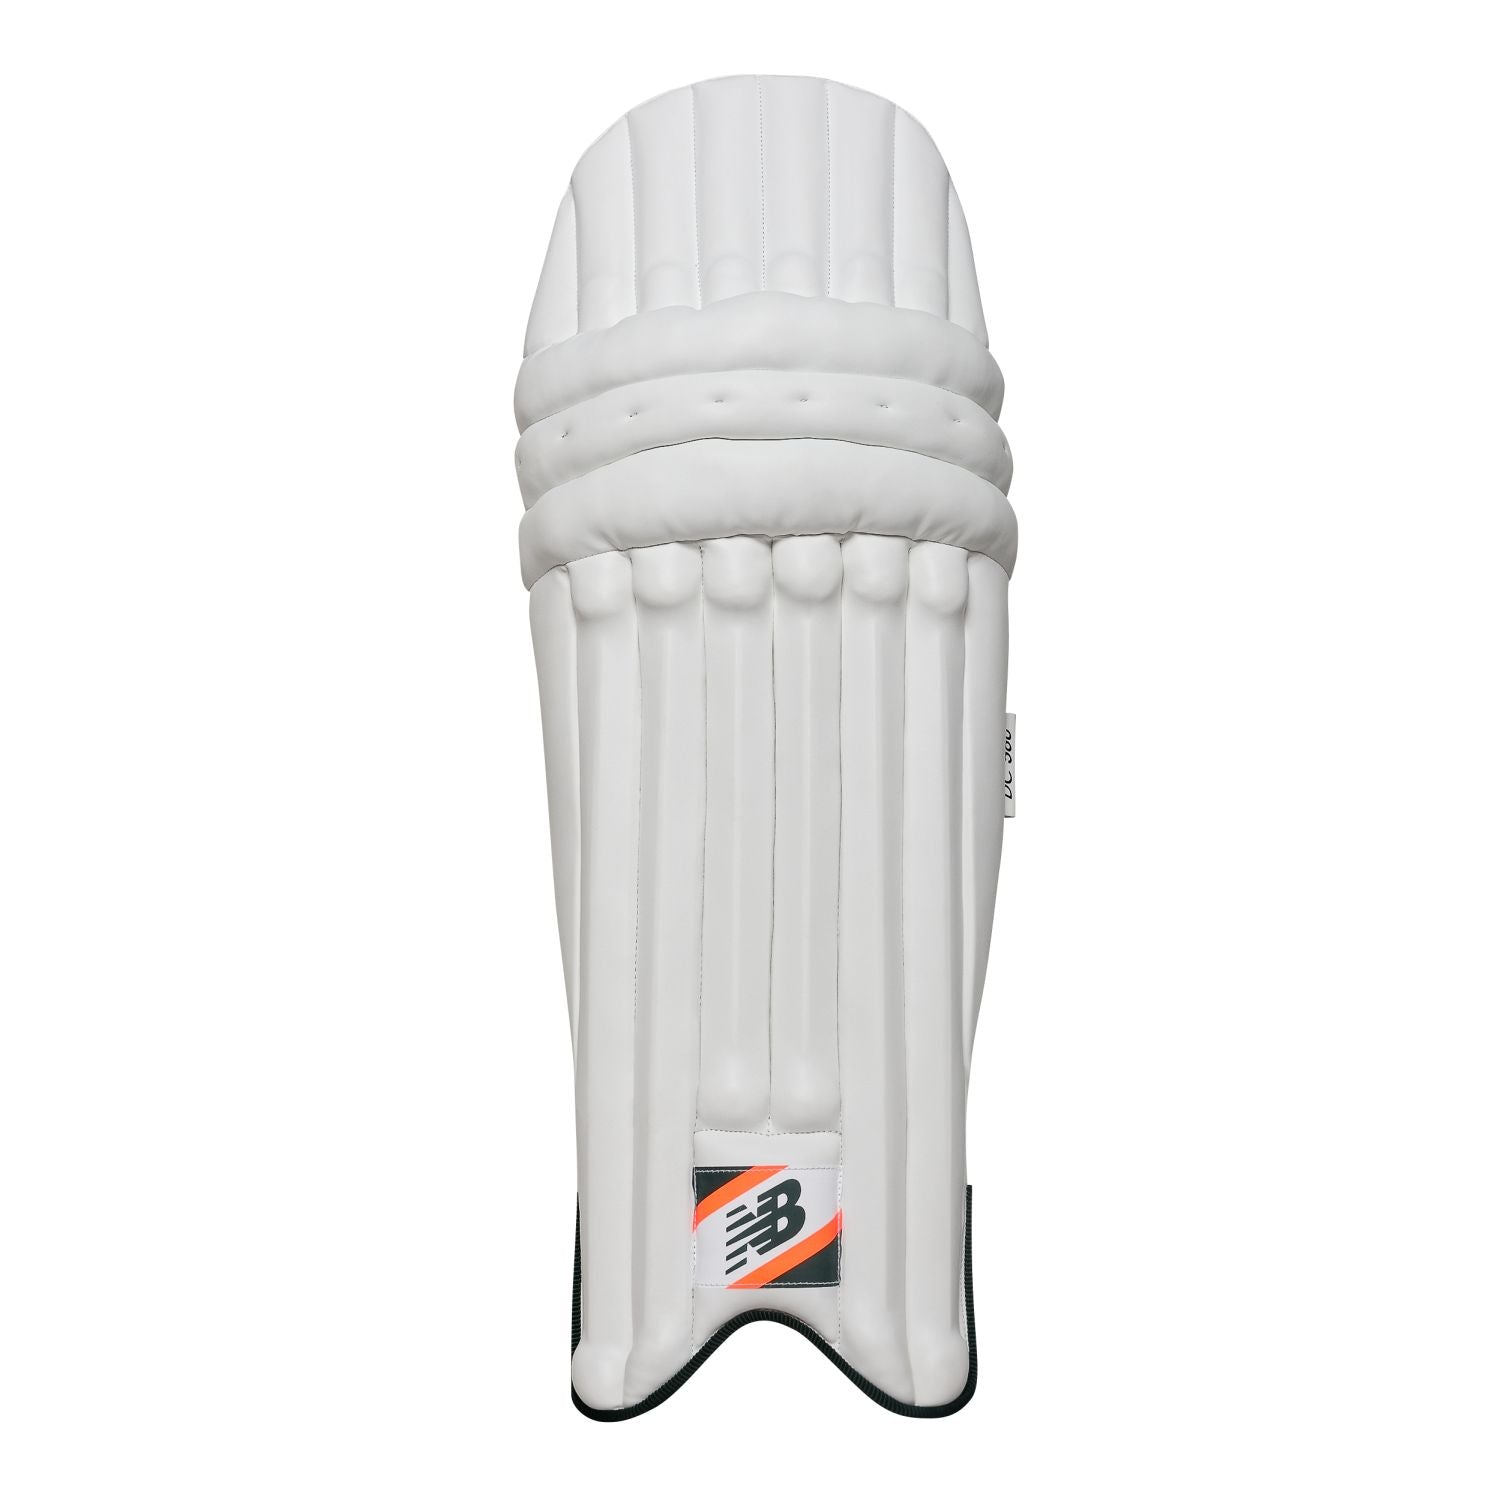 New Balance DC580 Cricket Batting Pads